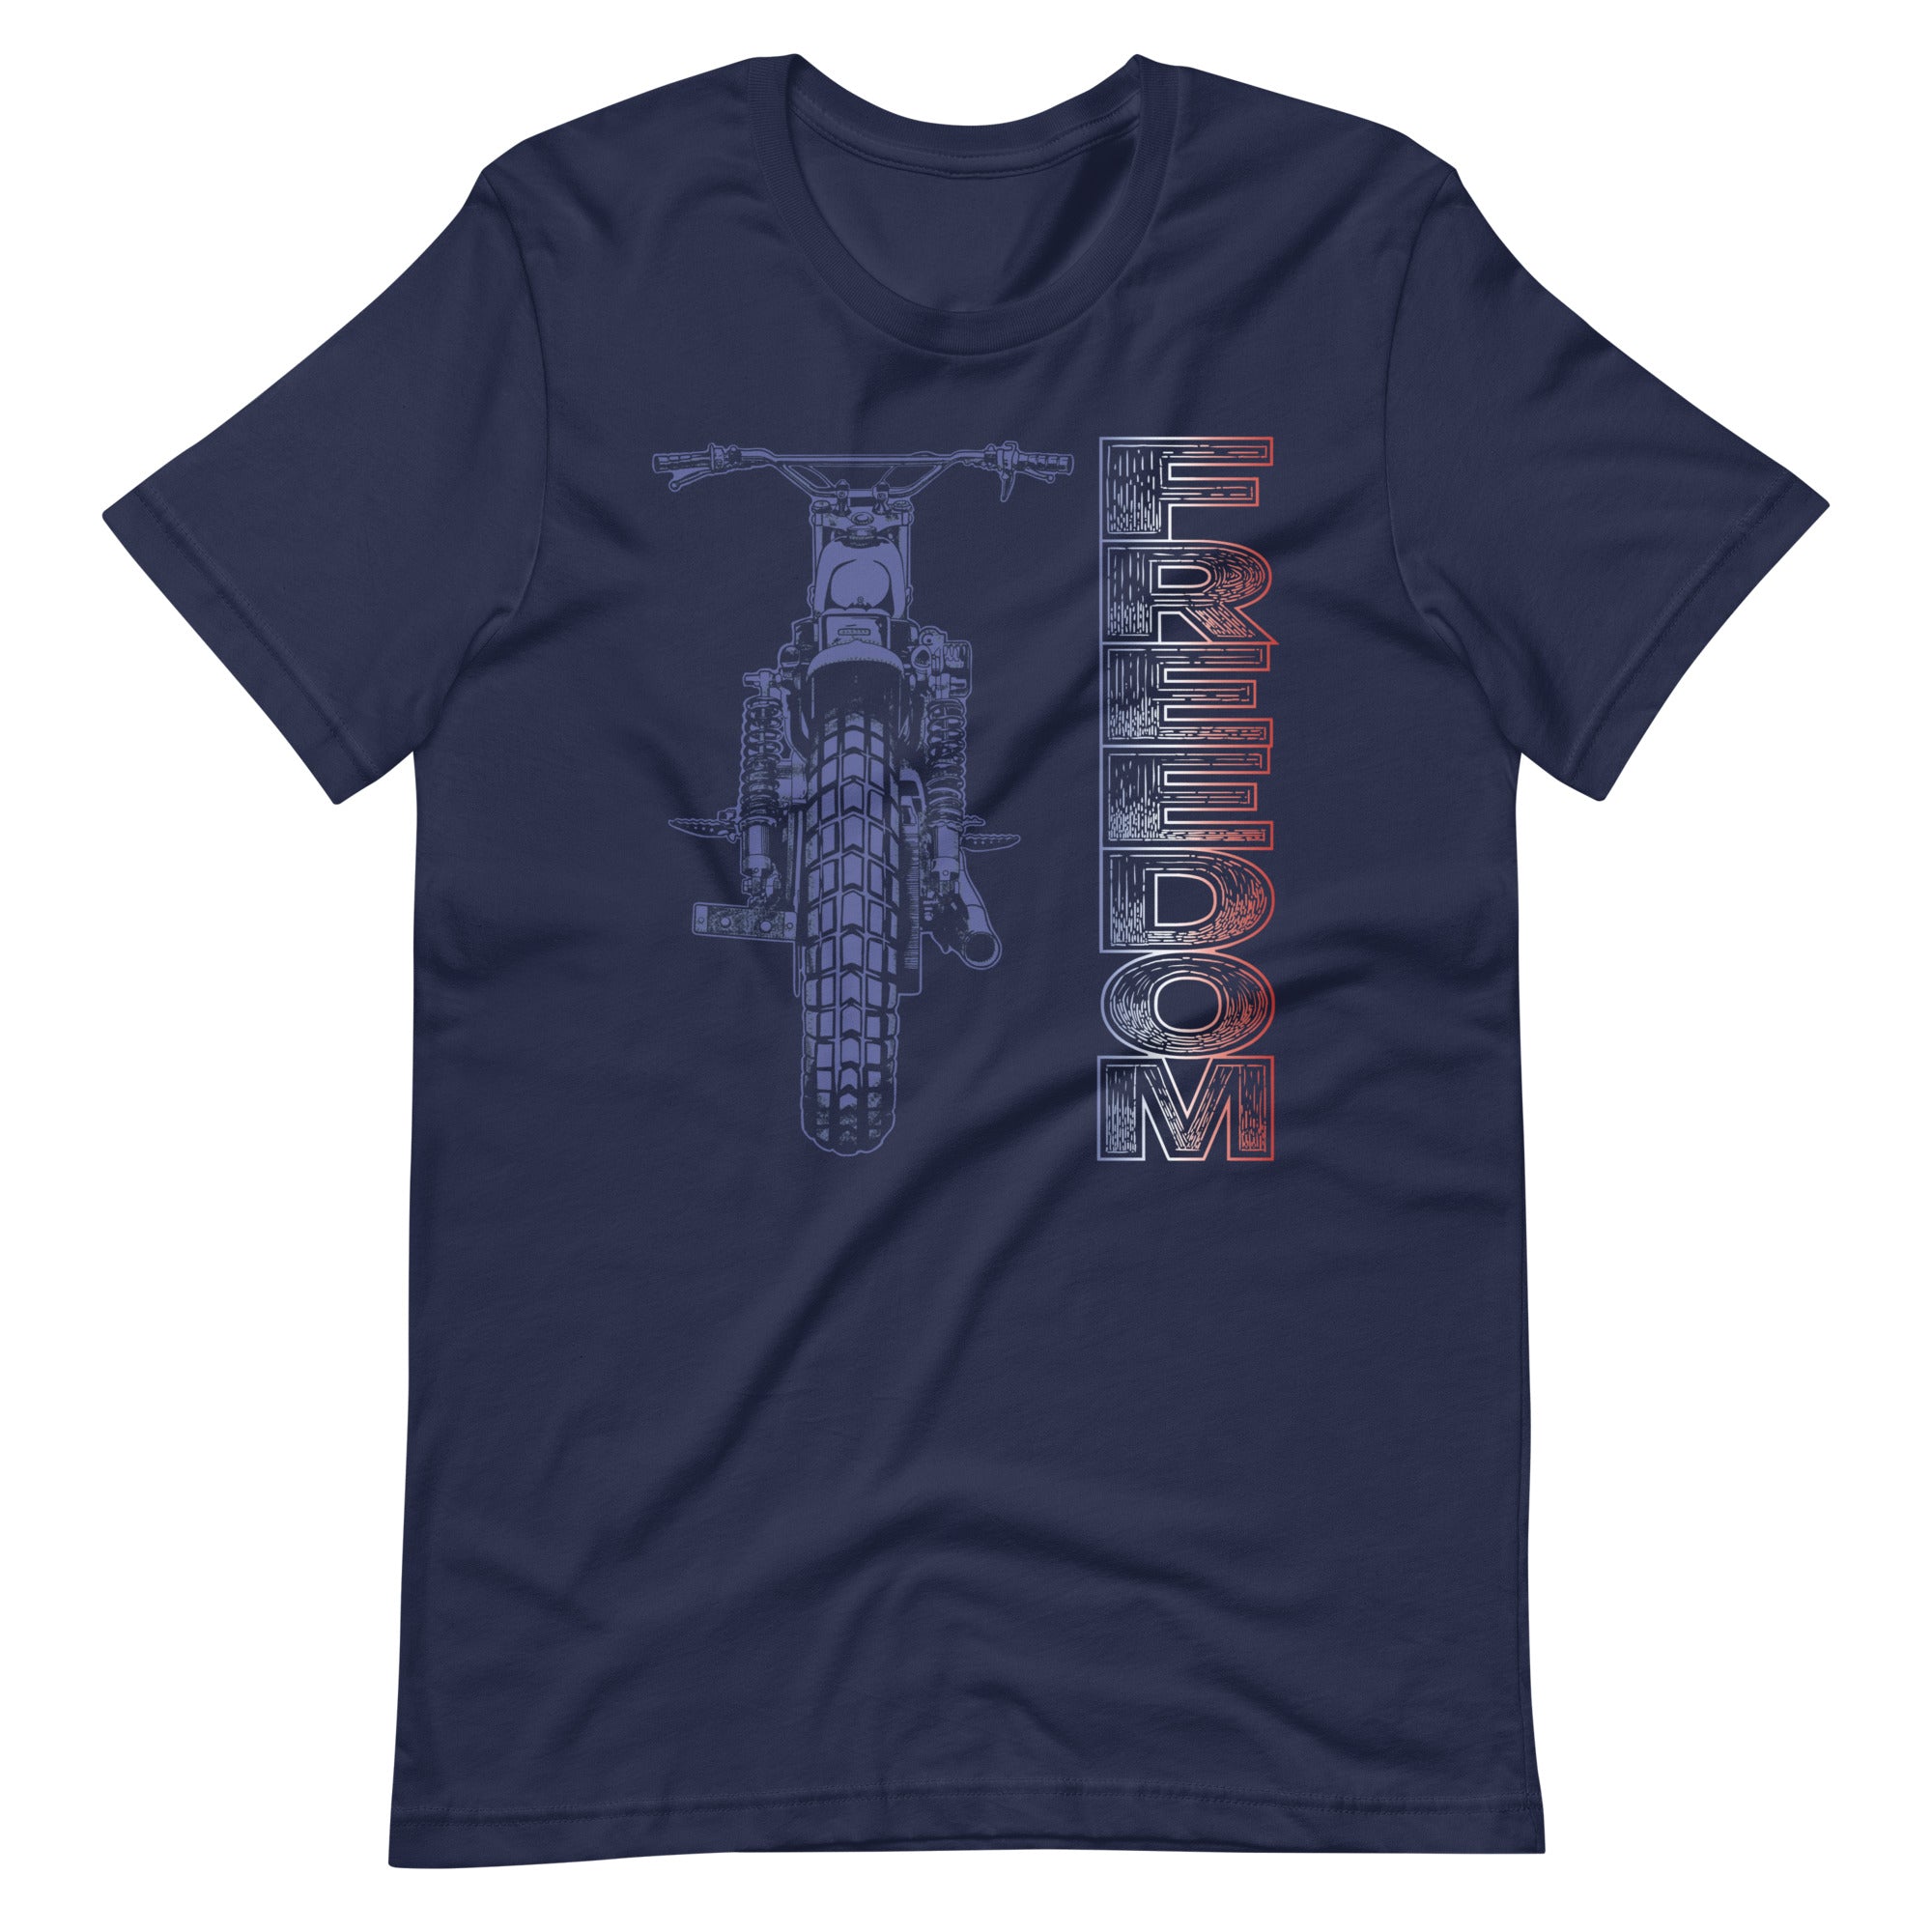 "Freedom" - Cafe Racer Tee Shirt